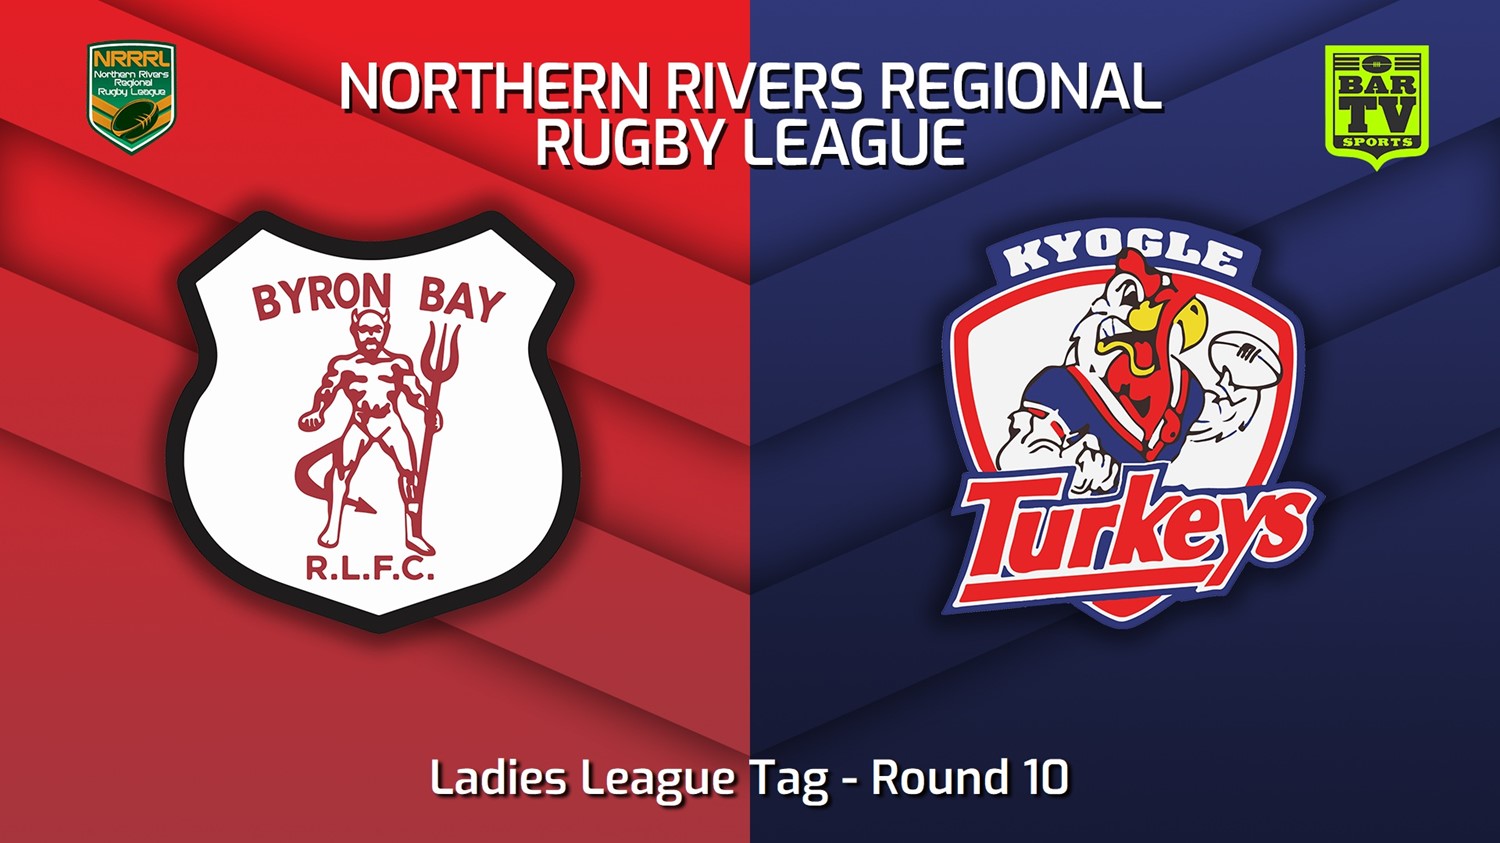 230625-Northern Rivers Round 10 - Ladies League Tag - Byron Bay Red Devils v Kyogle Turkeys Slate Image